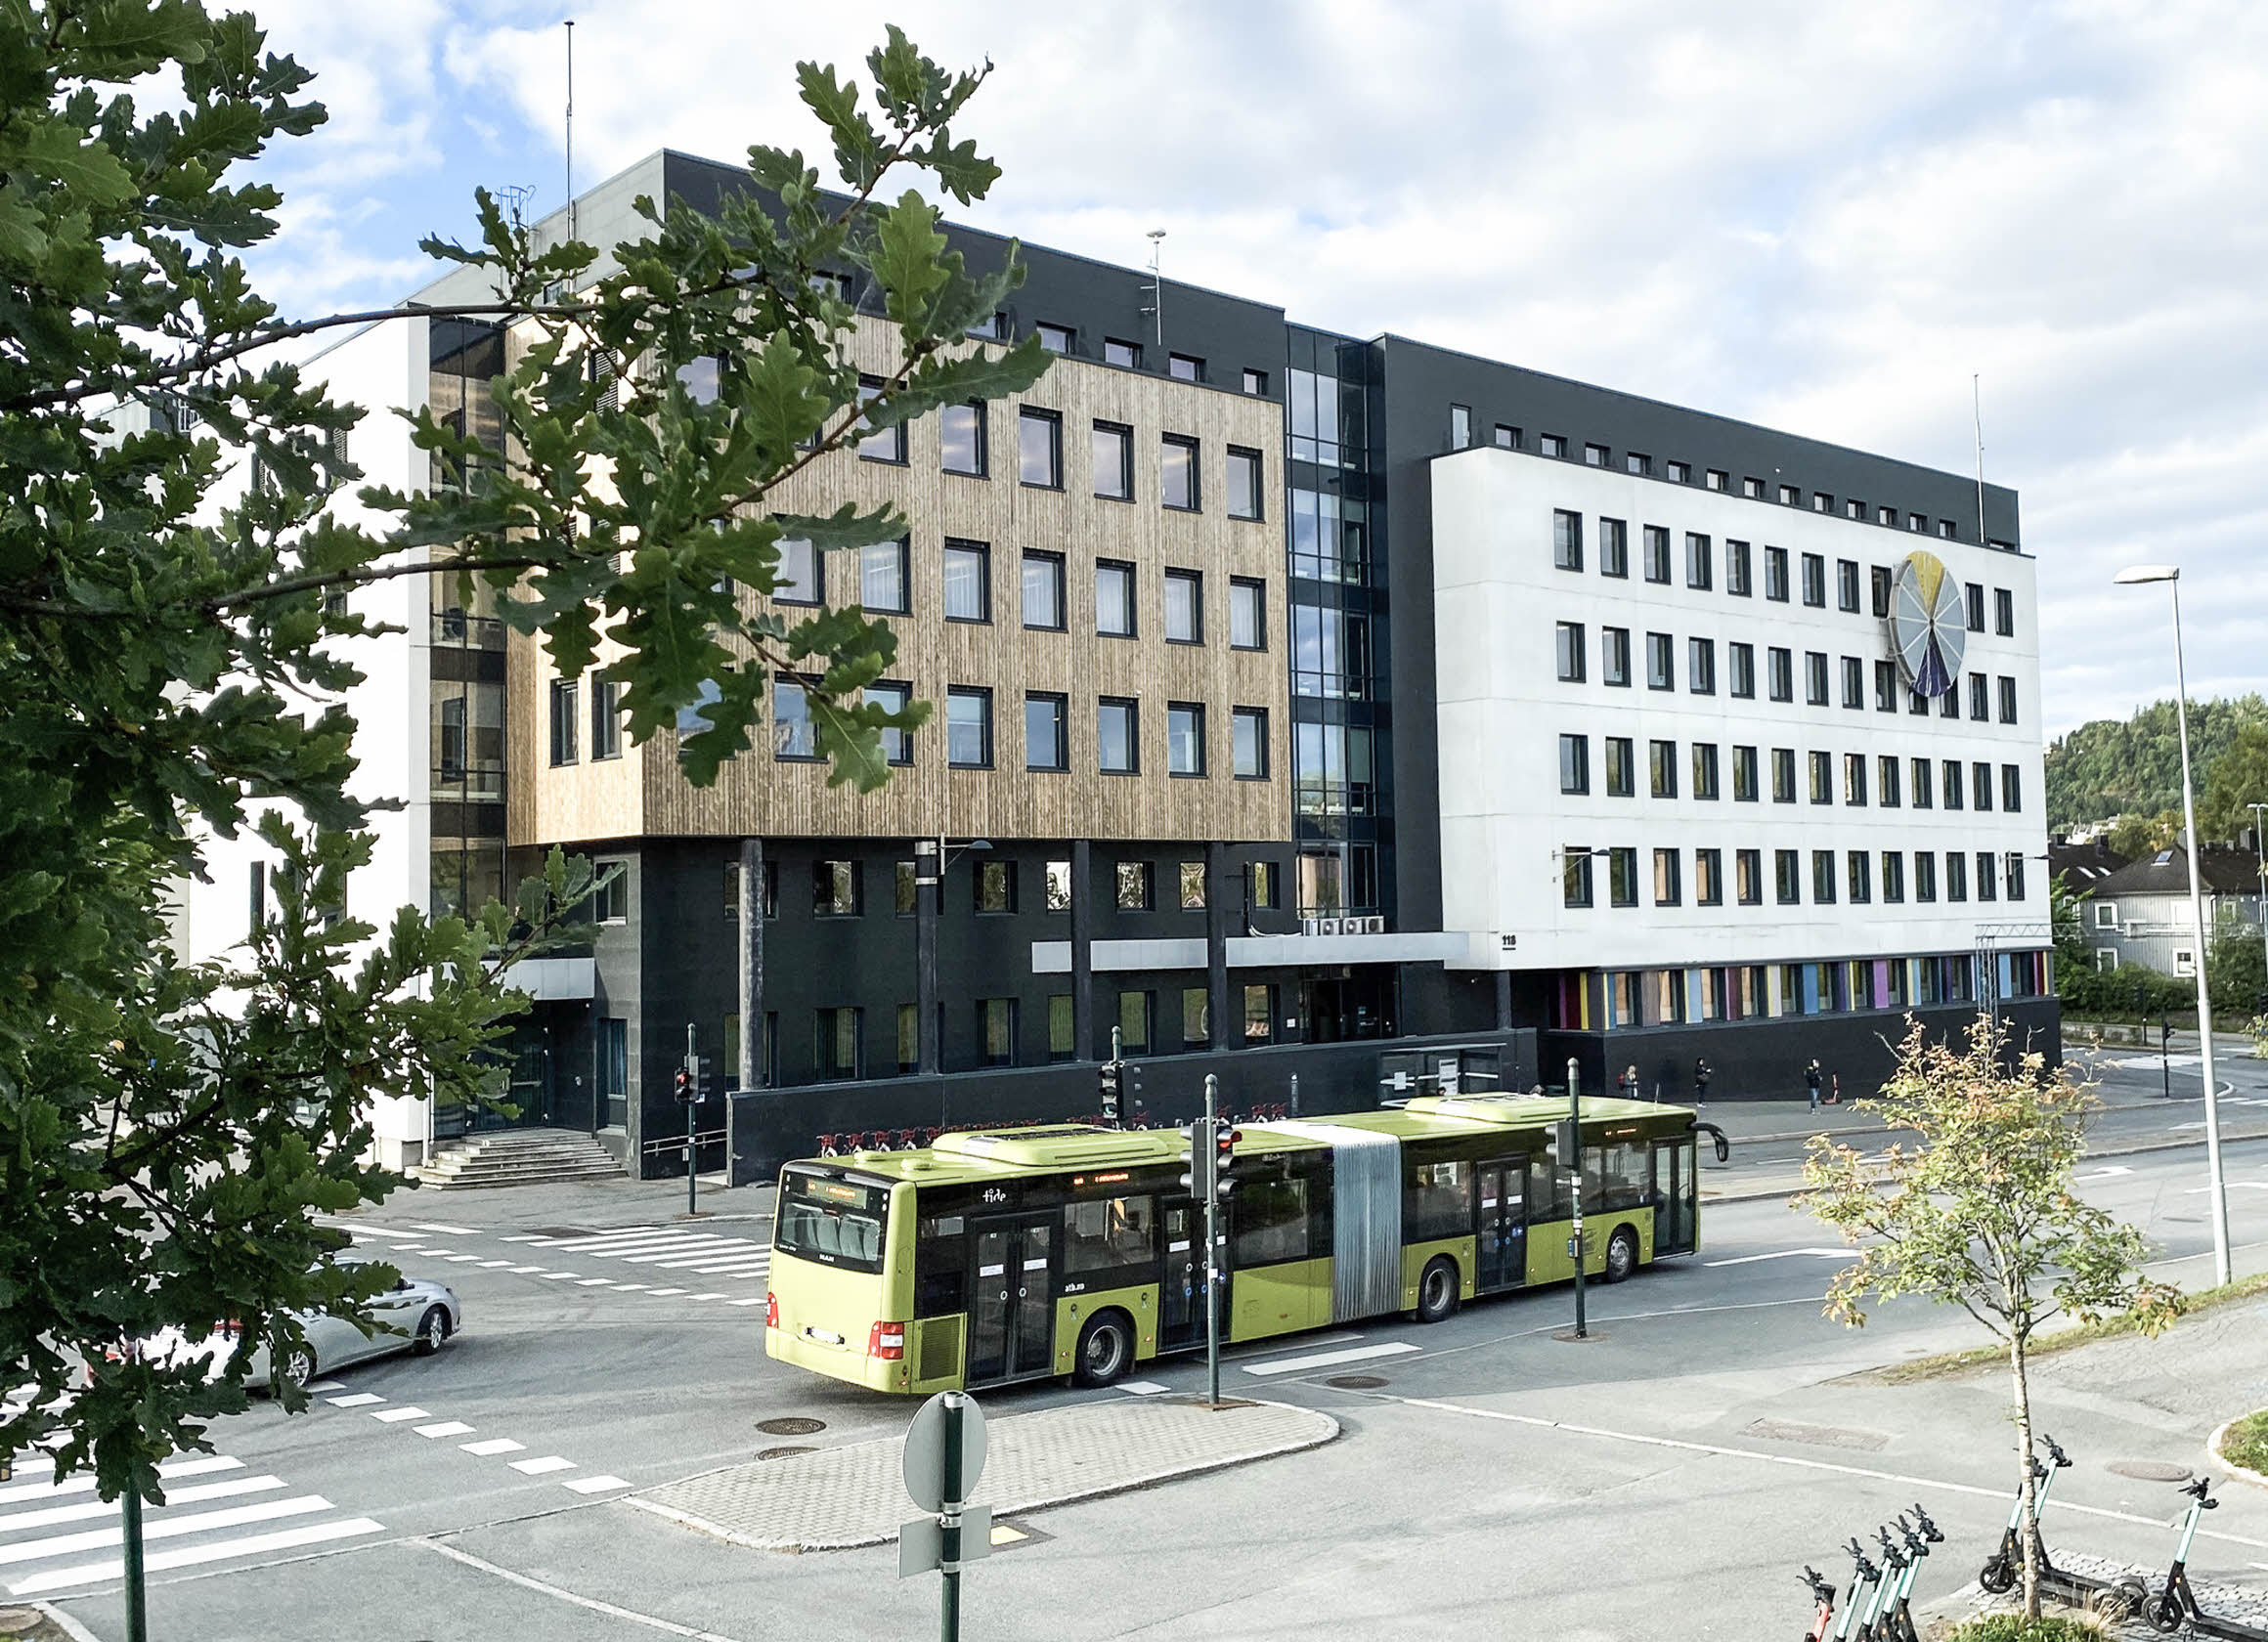 En buss parkert foran en bygning